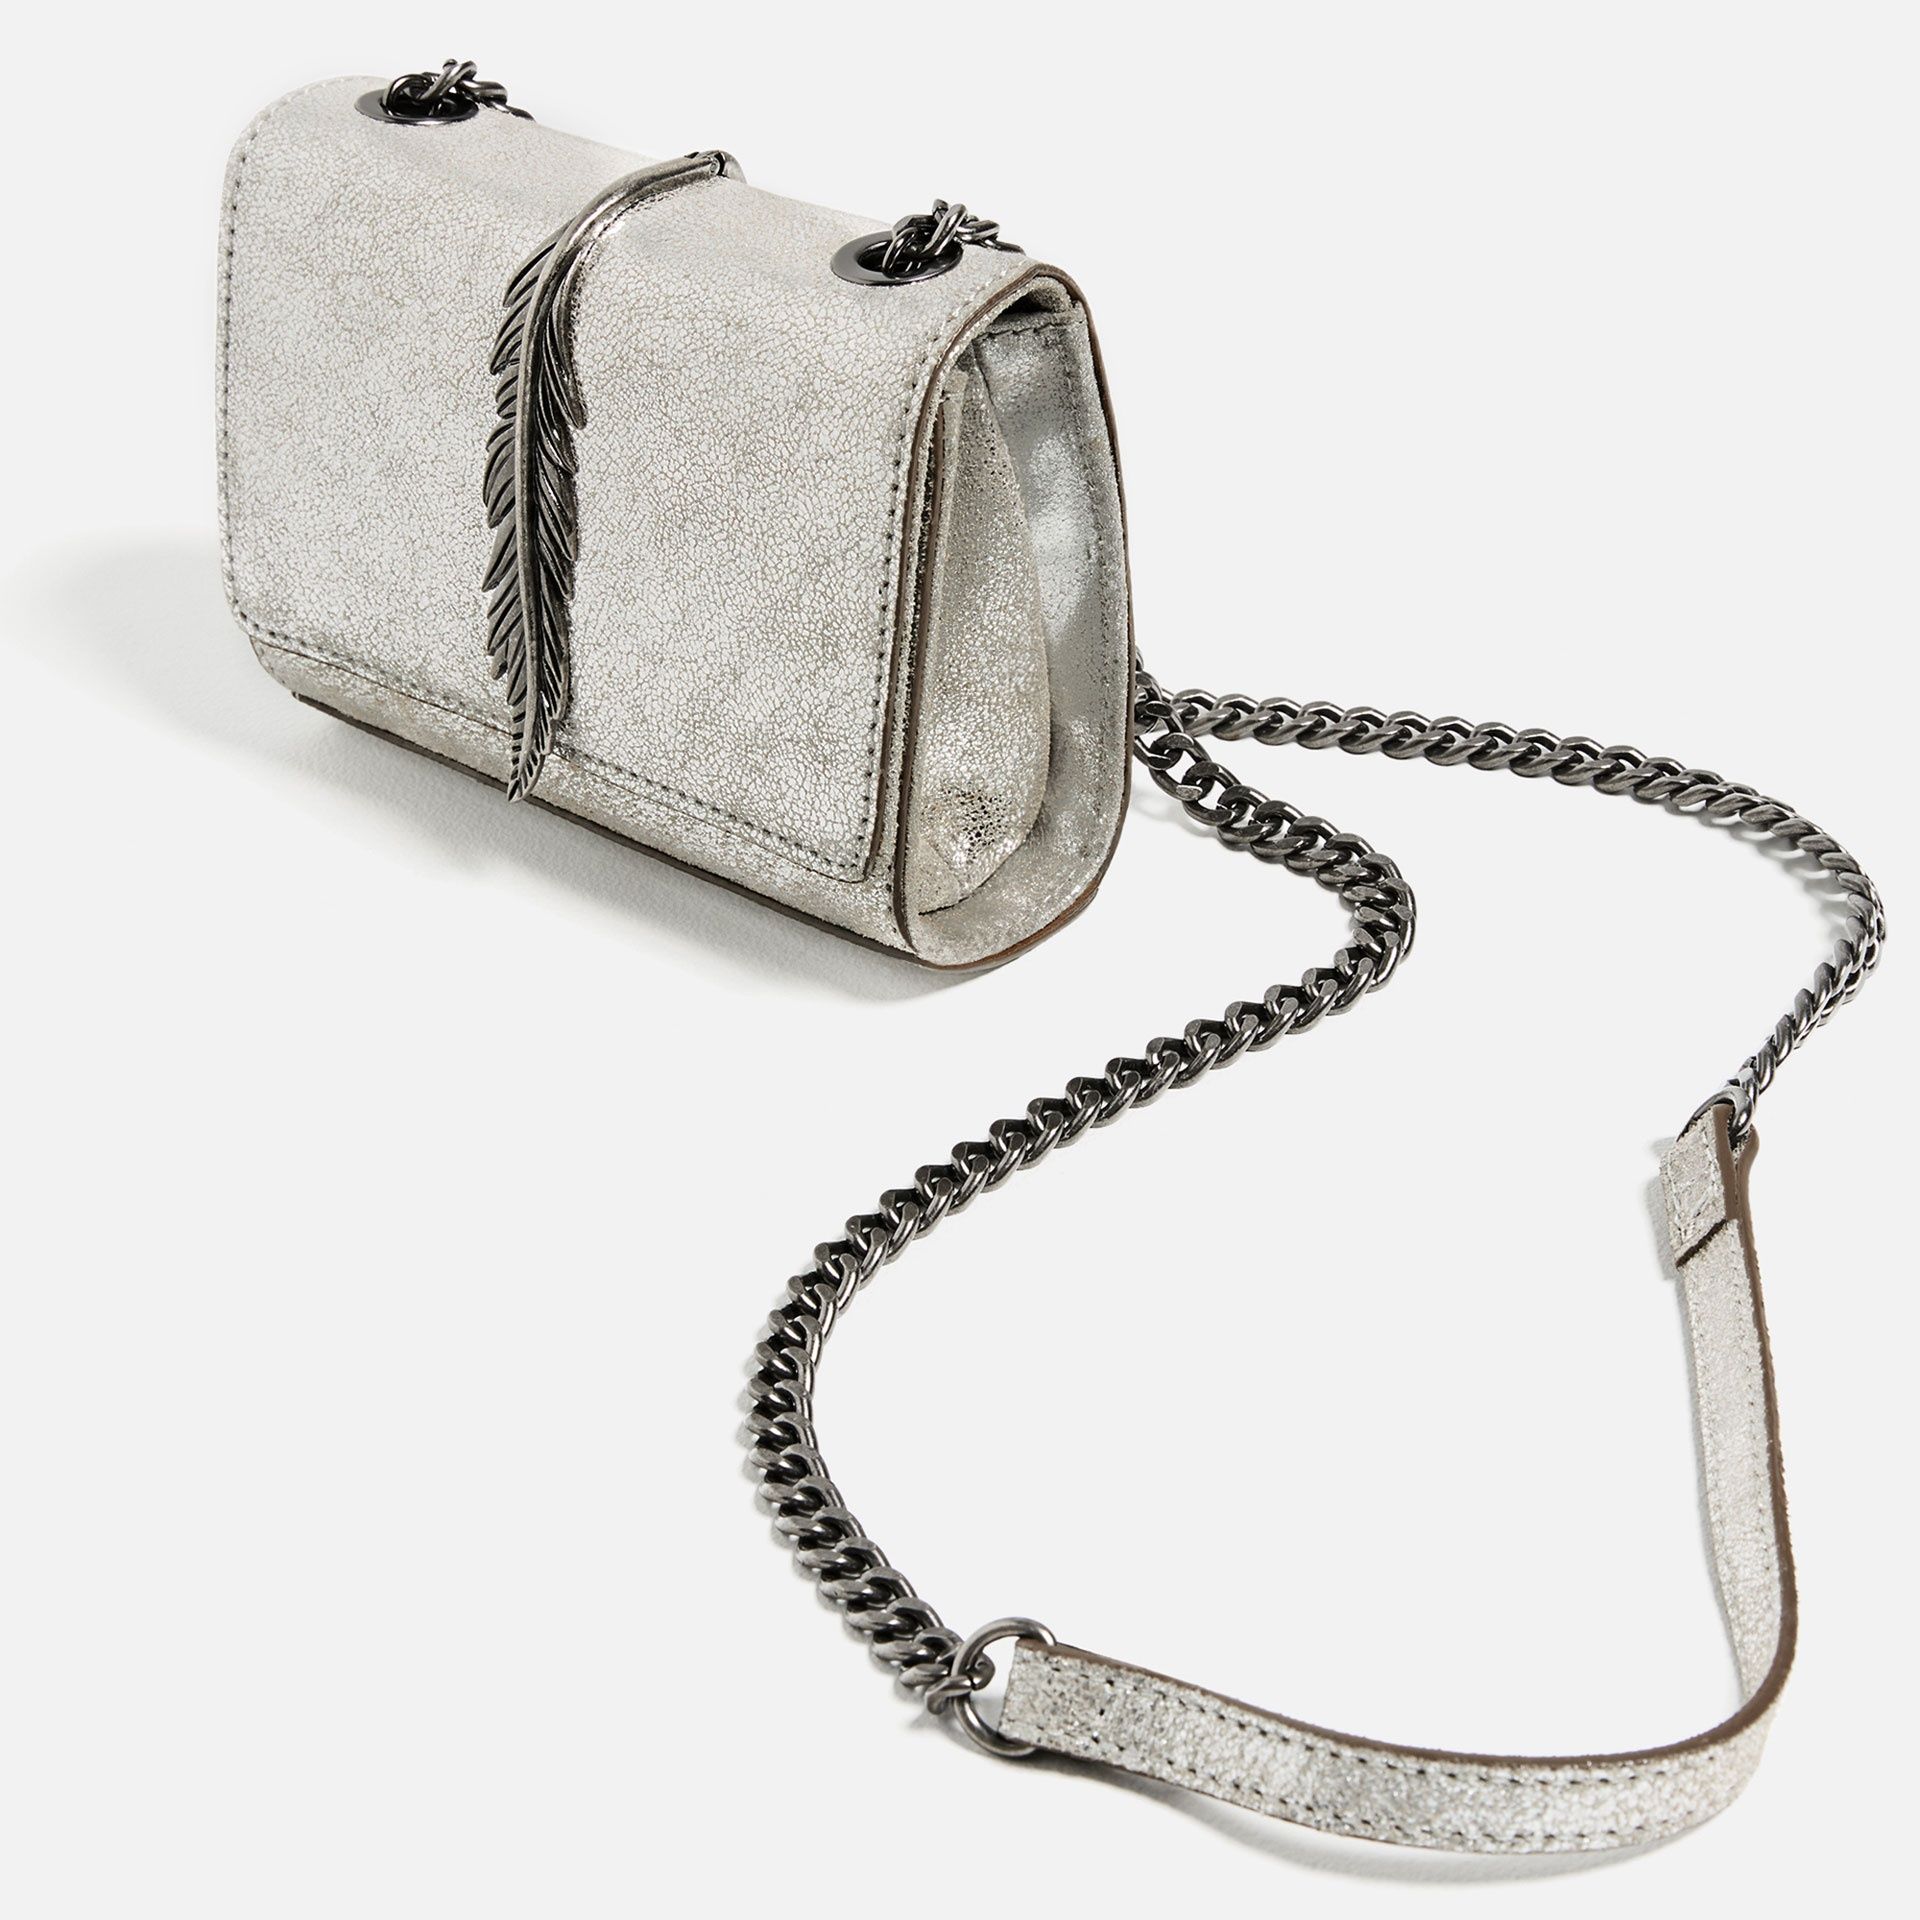 Кожаная сумка Zara металлик серебро кожа